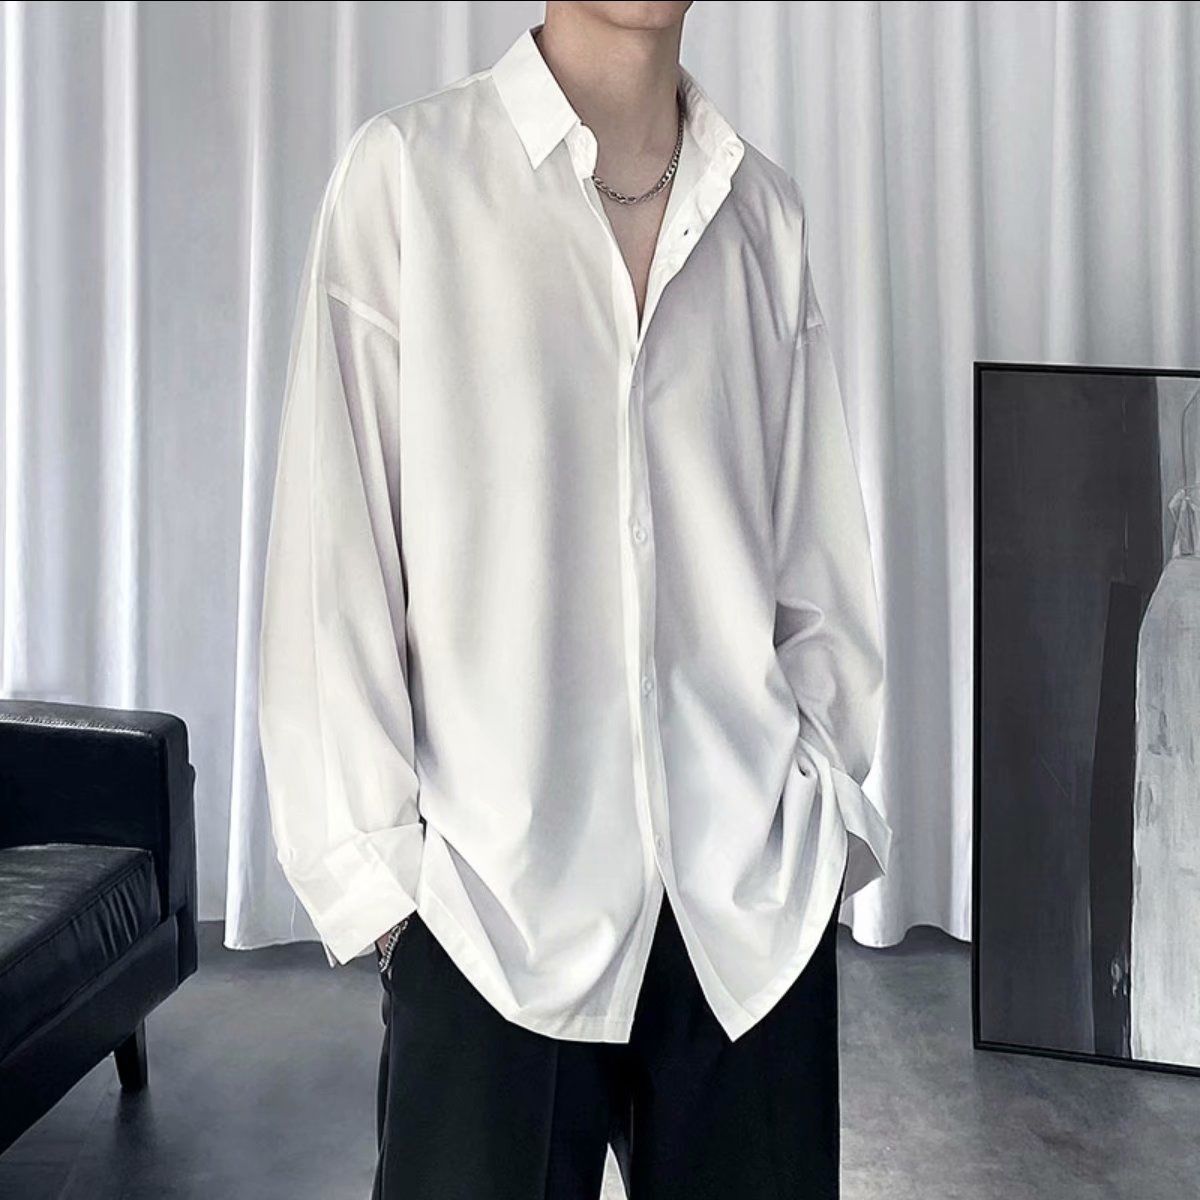 Ice silk short-sleeved shirt men's summer ruffian handsome black half-sleeved Hong Kong style trend drape jacket loose casual dk top